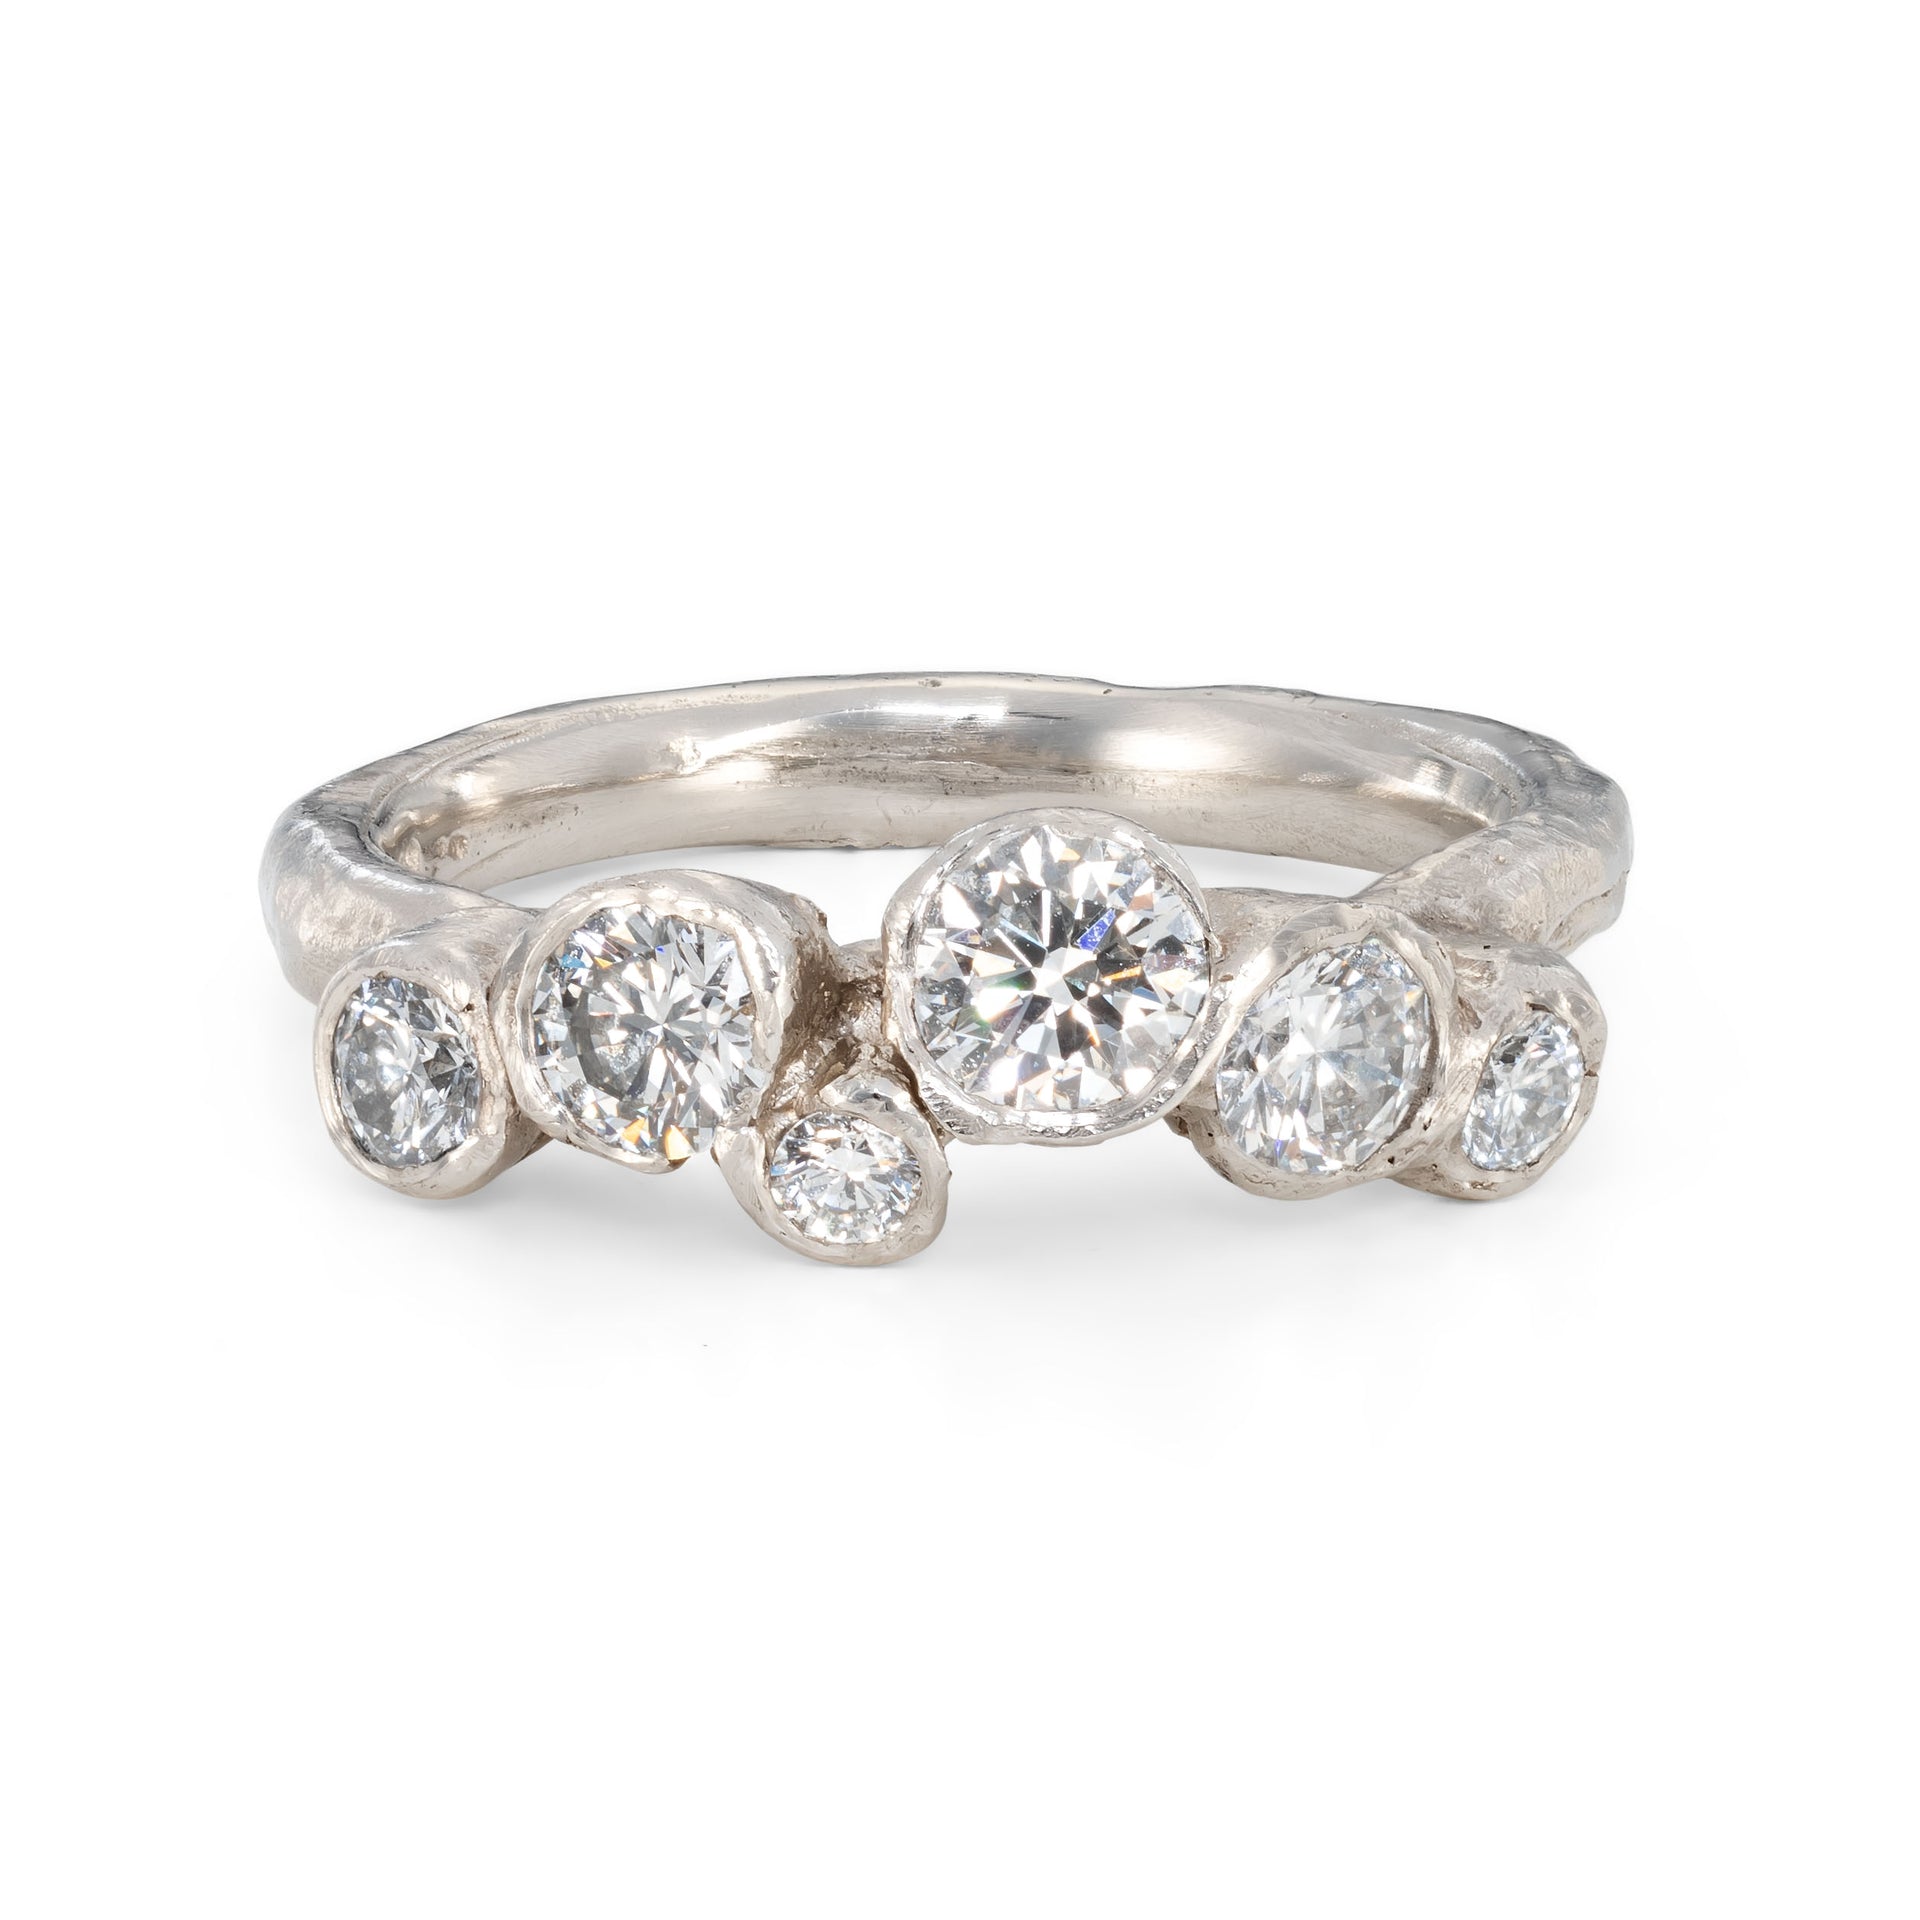 Diamond and recycled platinum engagement ring, designed and handmade by Cornish jeweller Emily Nixon.